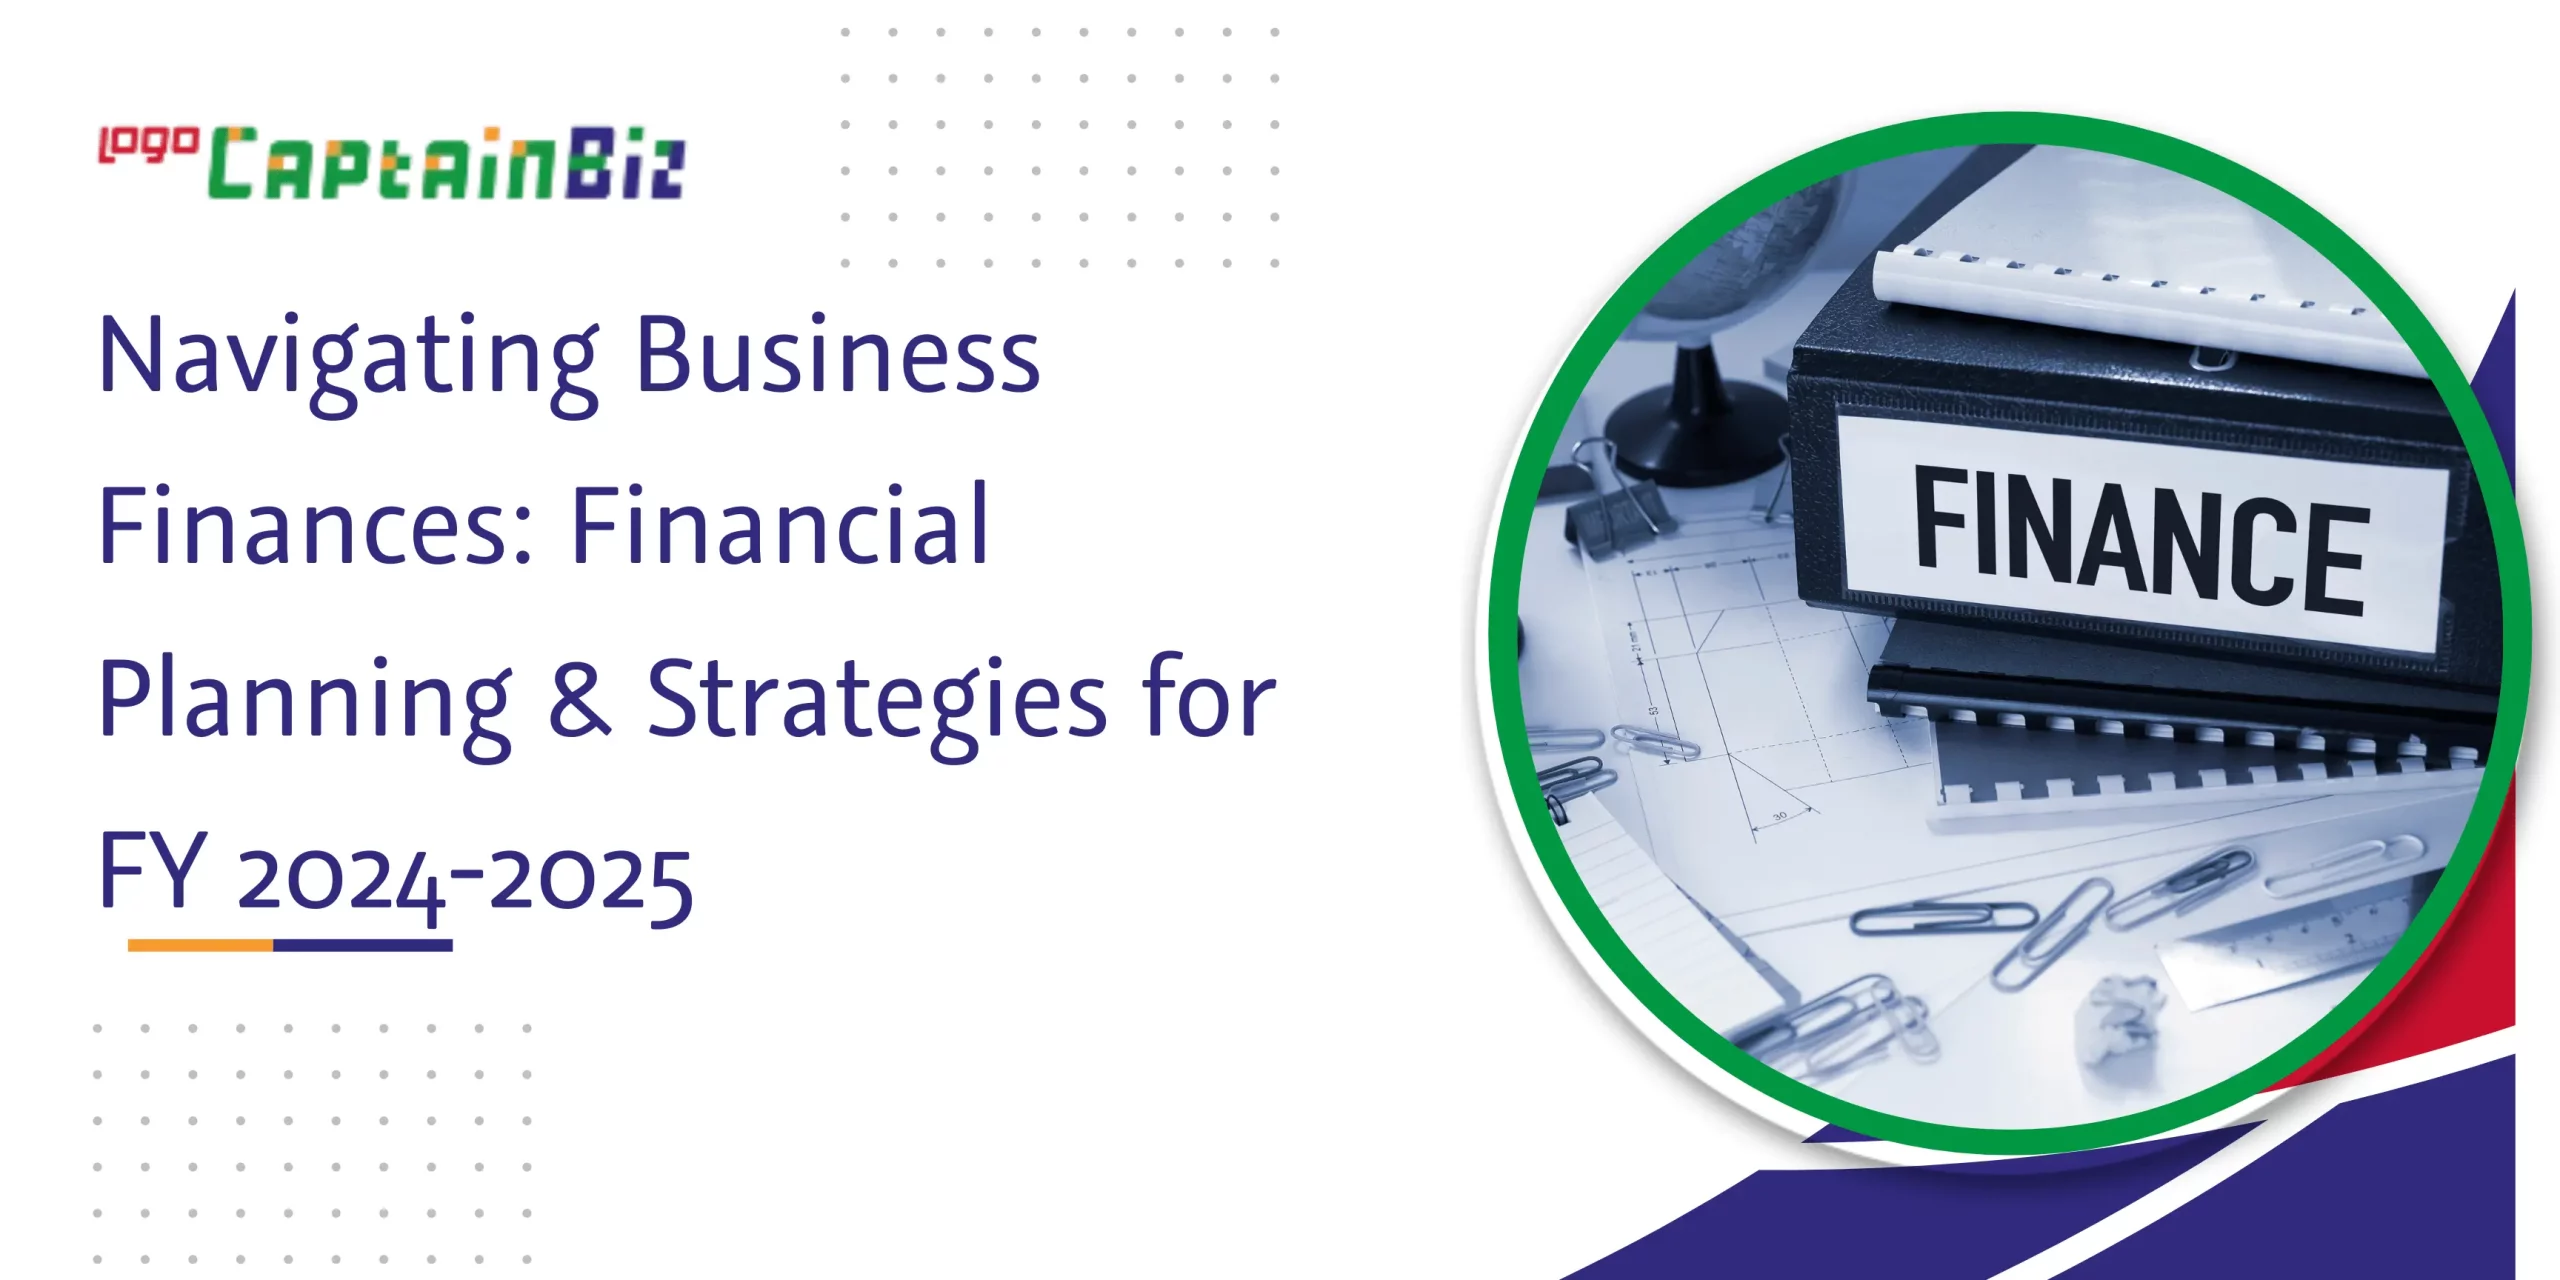 CaptainBiz: navigating business finances: financial planning & strategies for fy 2024-2025